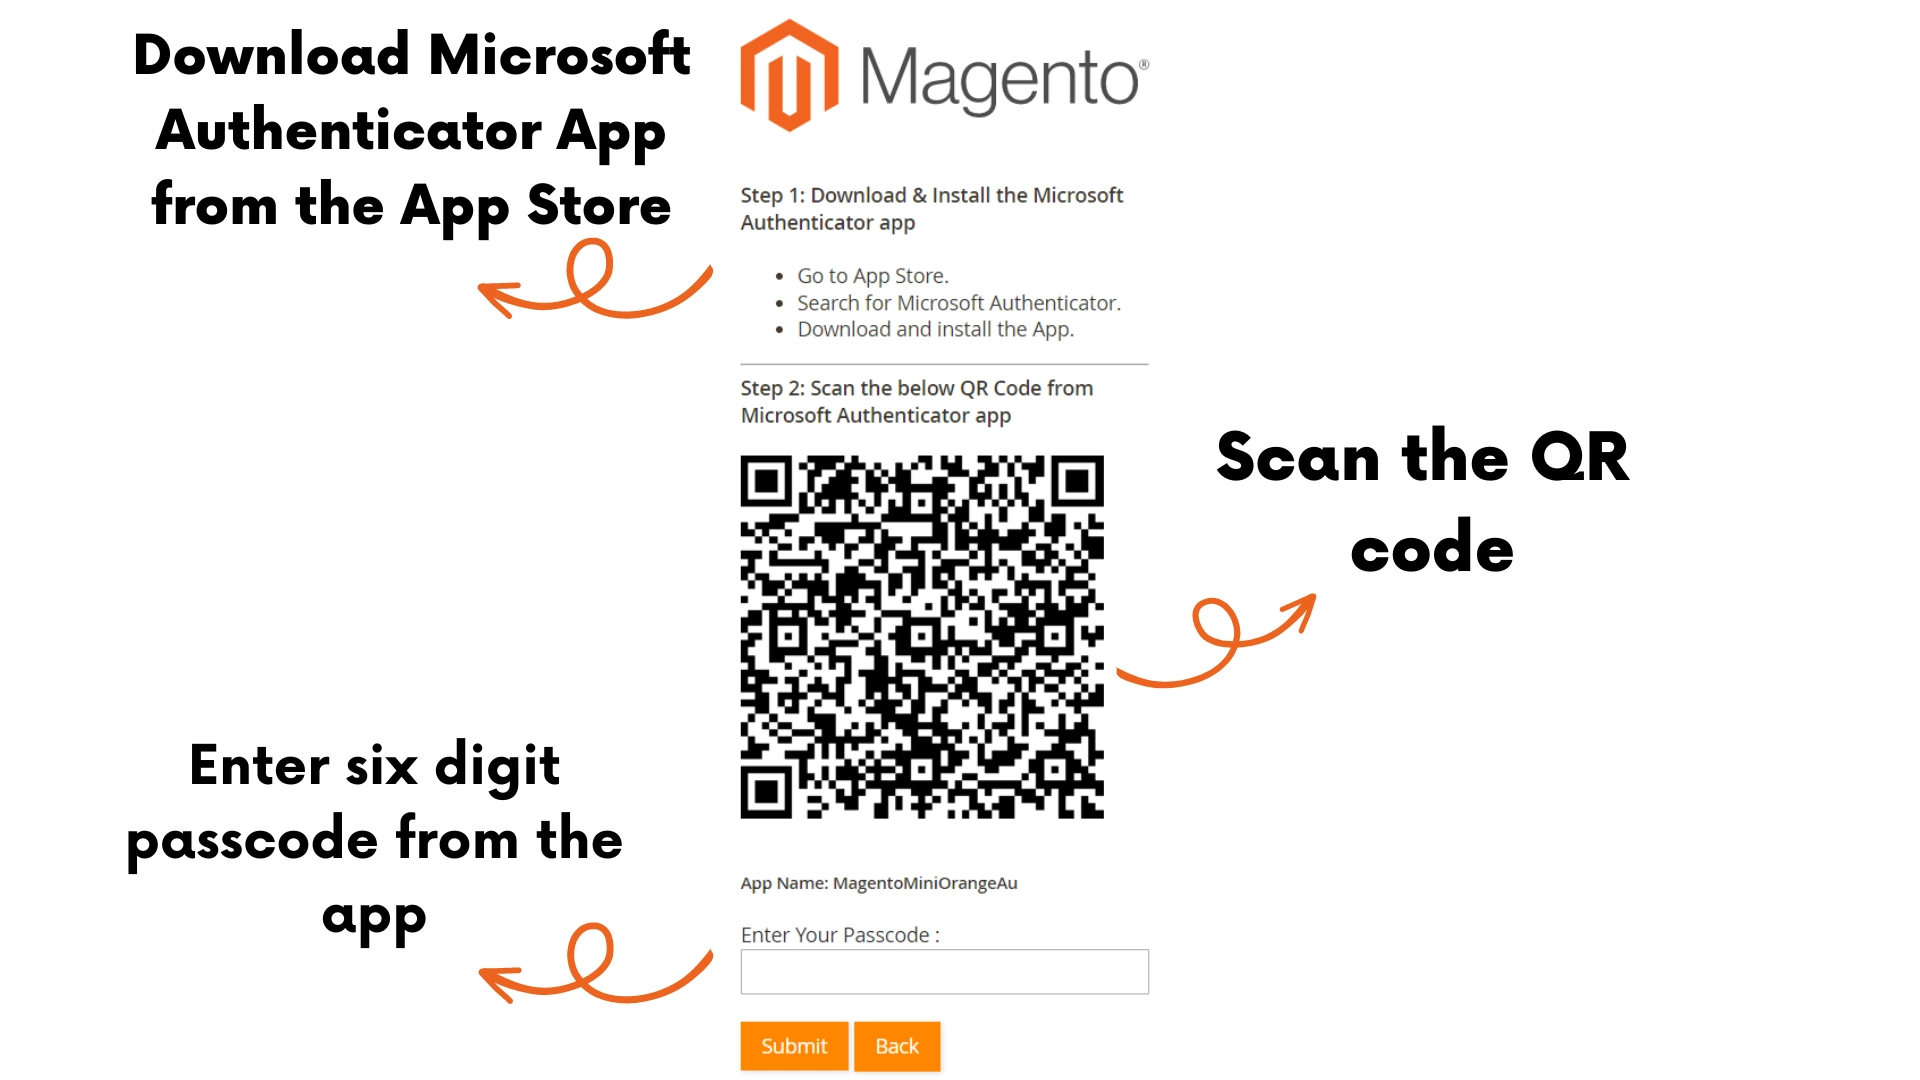 Magento microsoft authenticator | Microsoft authenticator qr code magento 2fa | Magento microsoft authenticator mfa | Magento microsoft authenticator login | Magento 2 Factor Authentication (2fa) (mfa) OTP over SMS registration | Magento OTP over SMS verification | magento sms verification